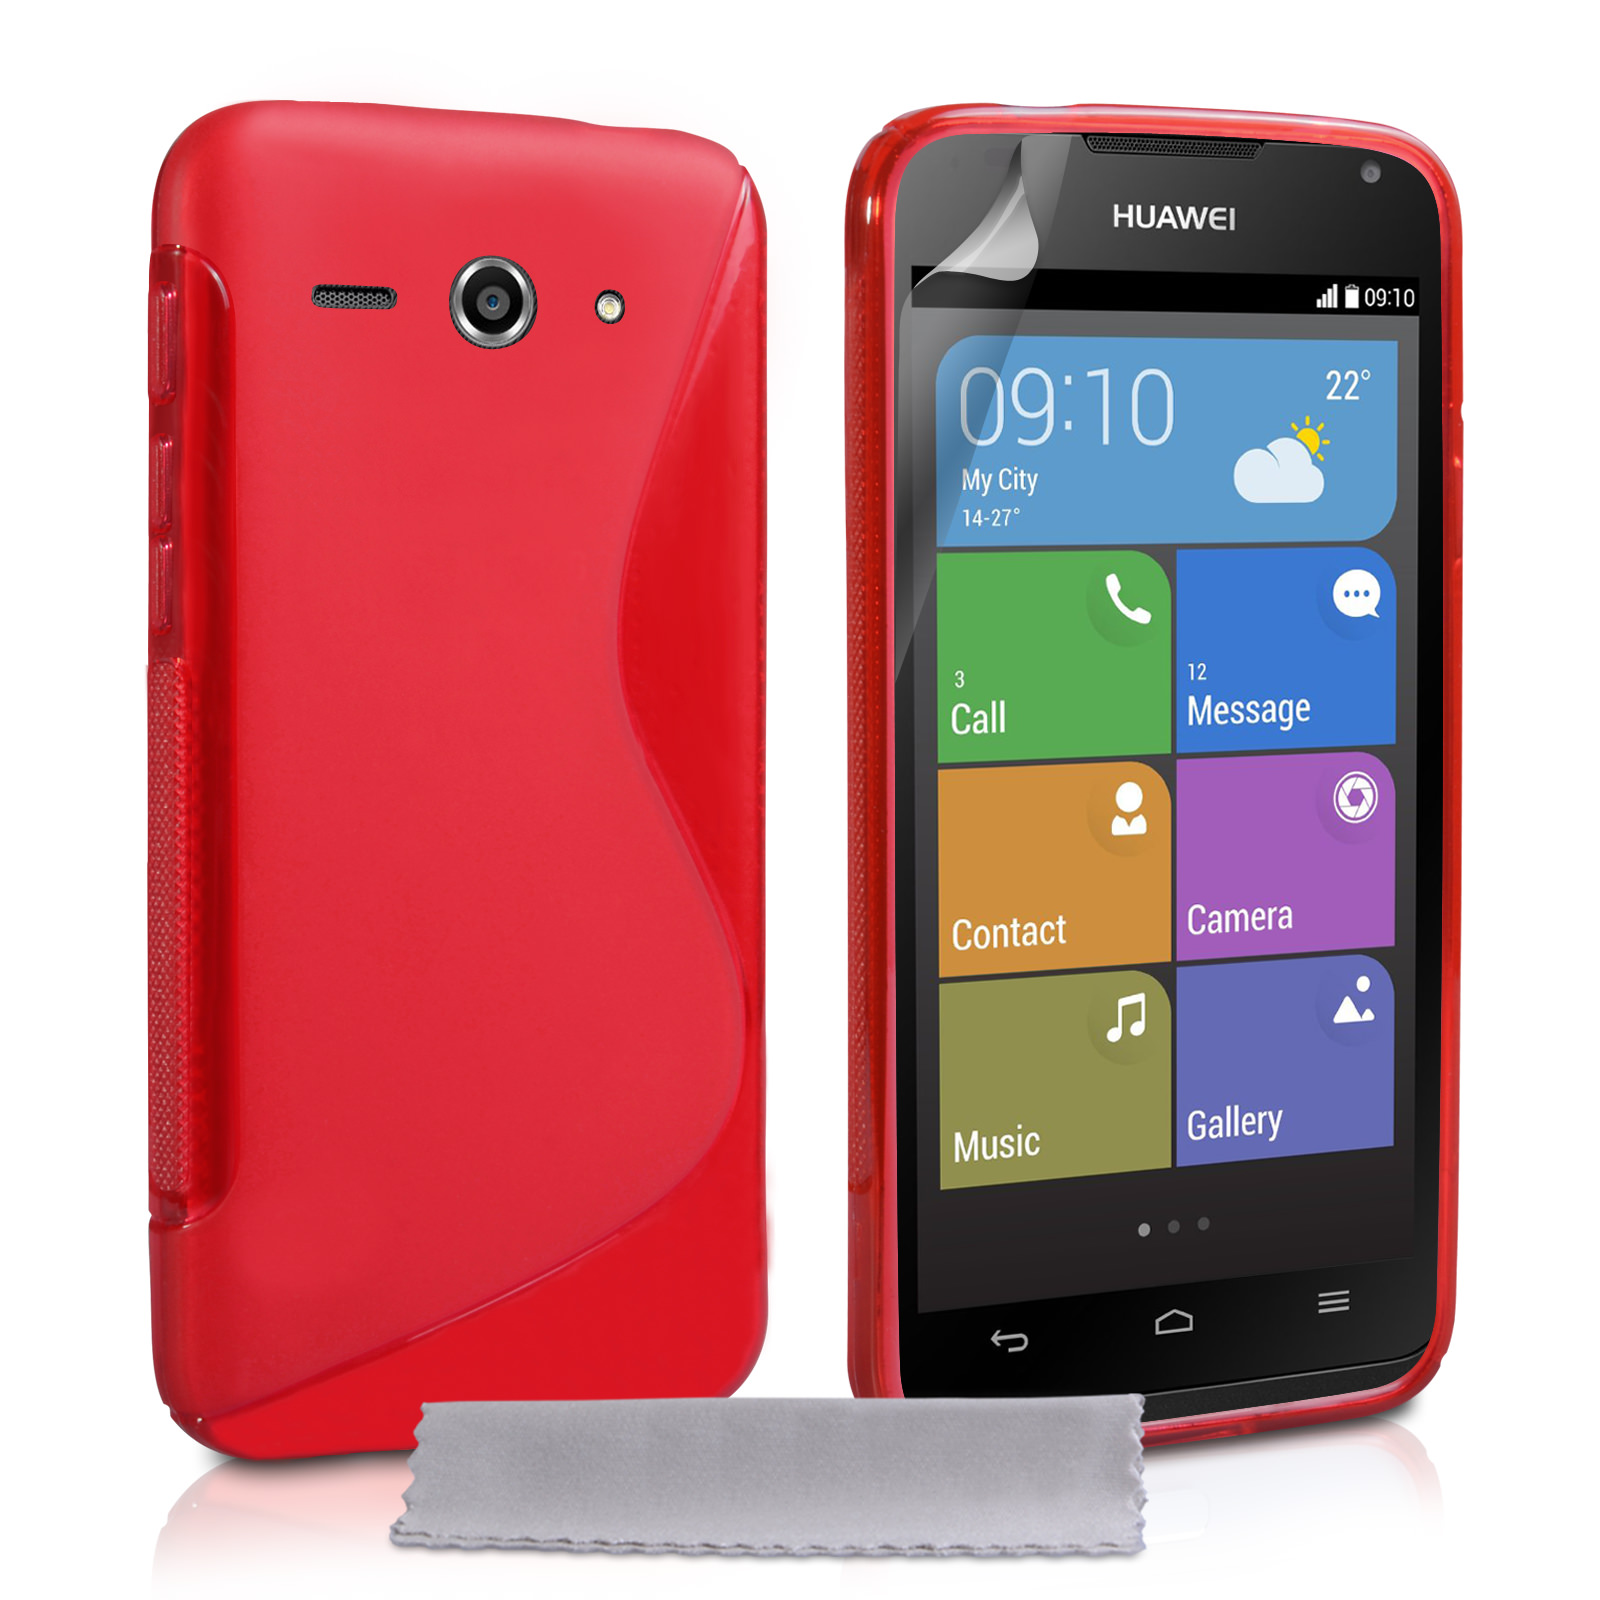 Caseflex Huawei Ascend Y530 Silicone Gel S-Line Case - Red